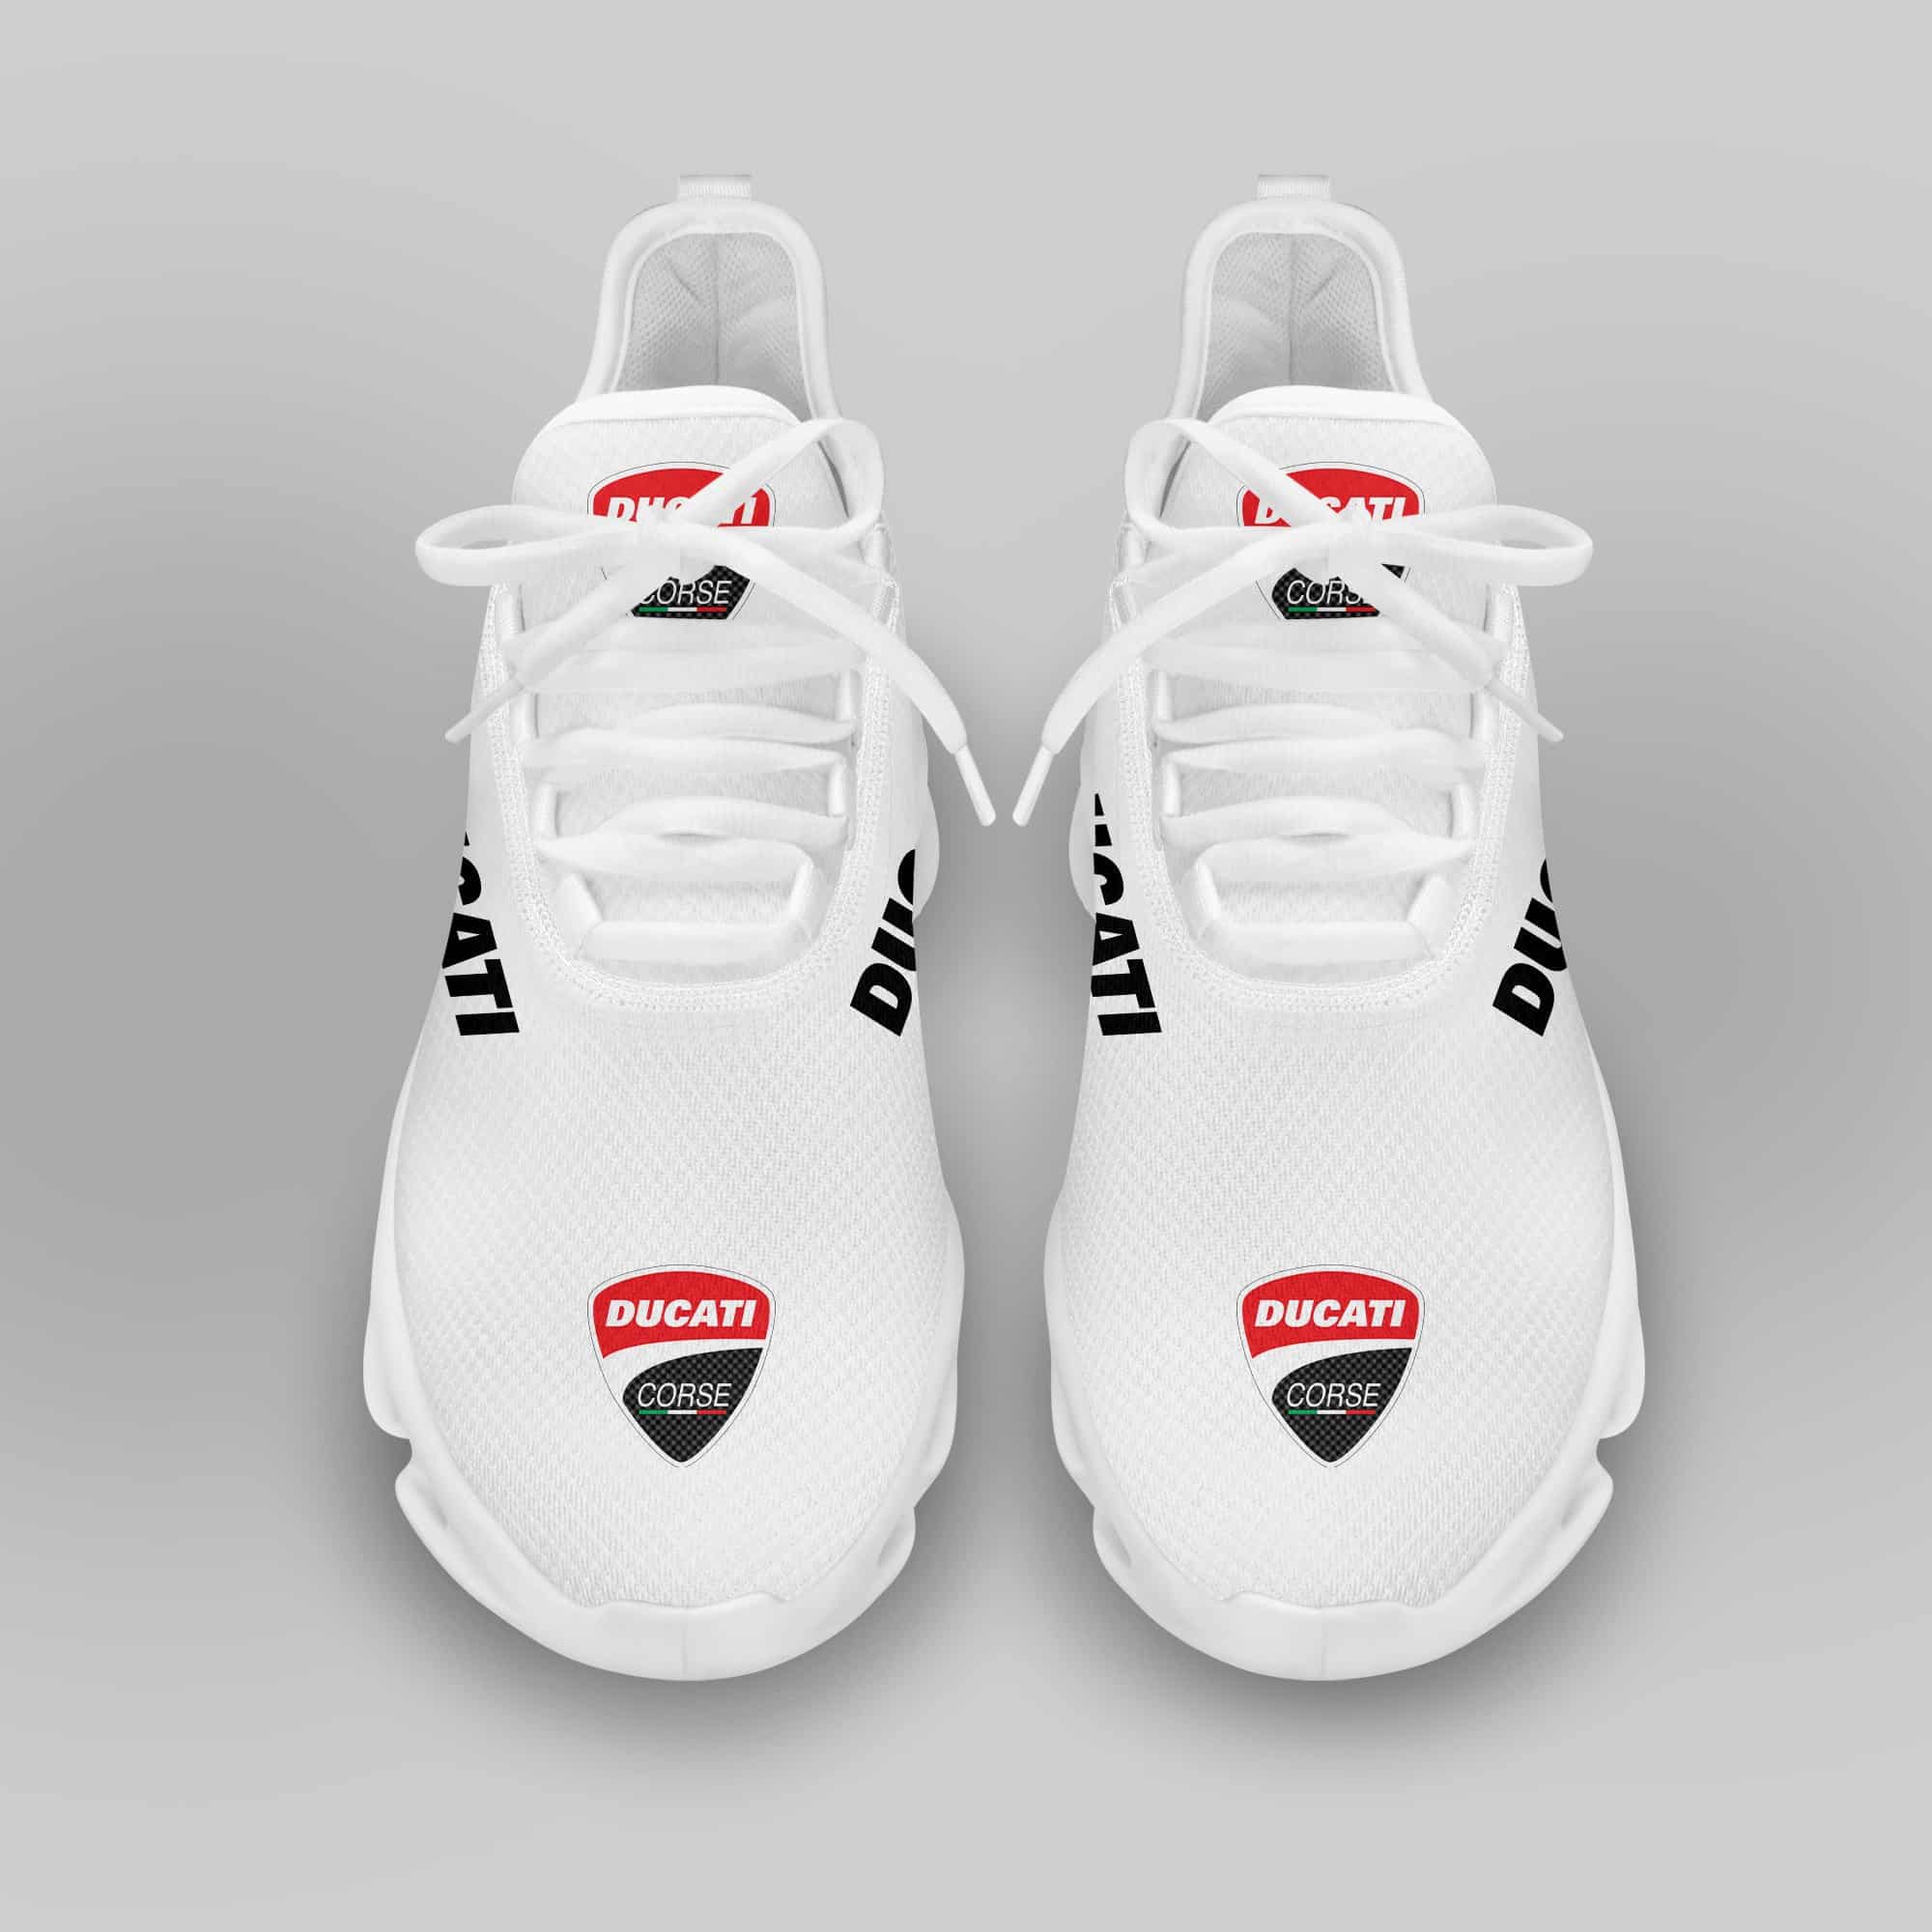 Ducati Racing Running Shoes Max Soul Shoes Sneakers Ver 29 3